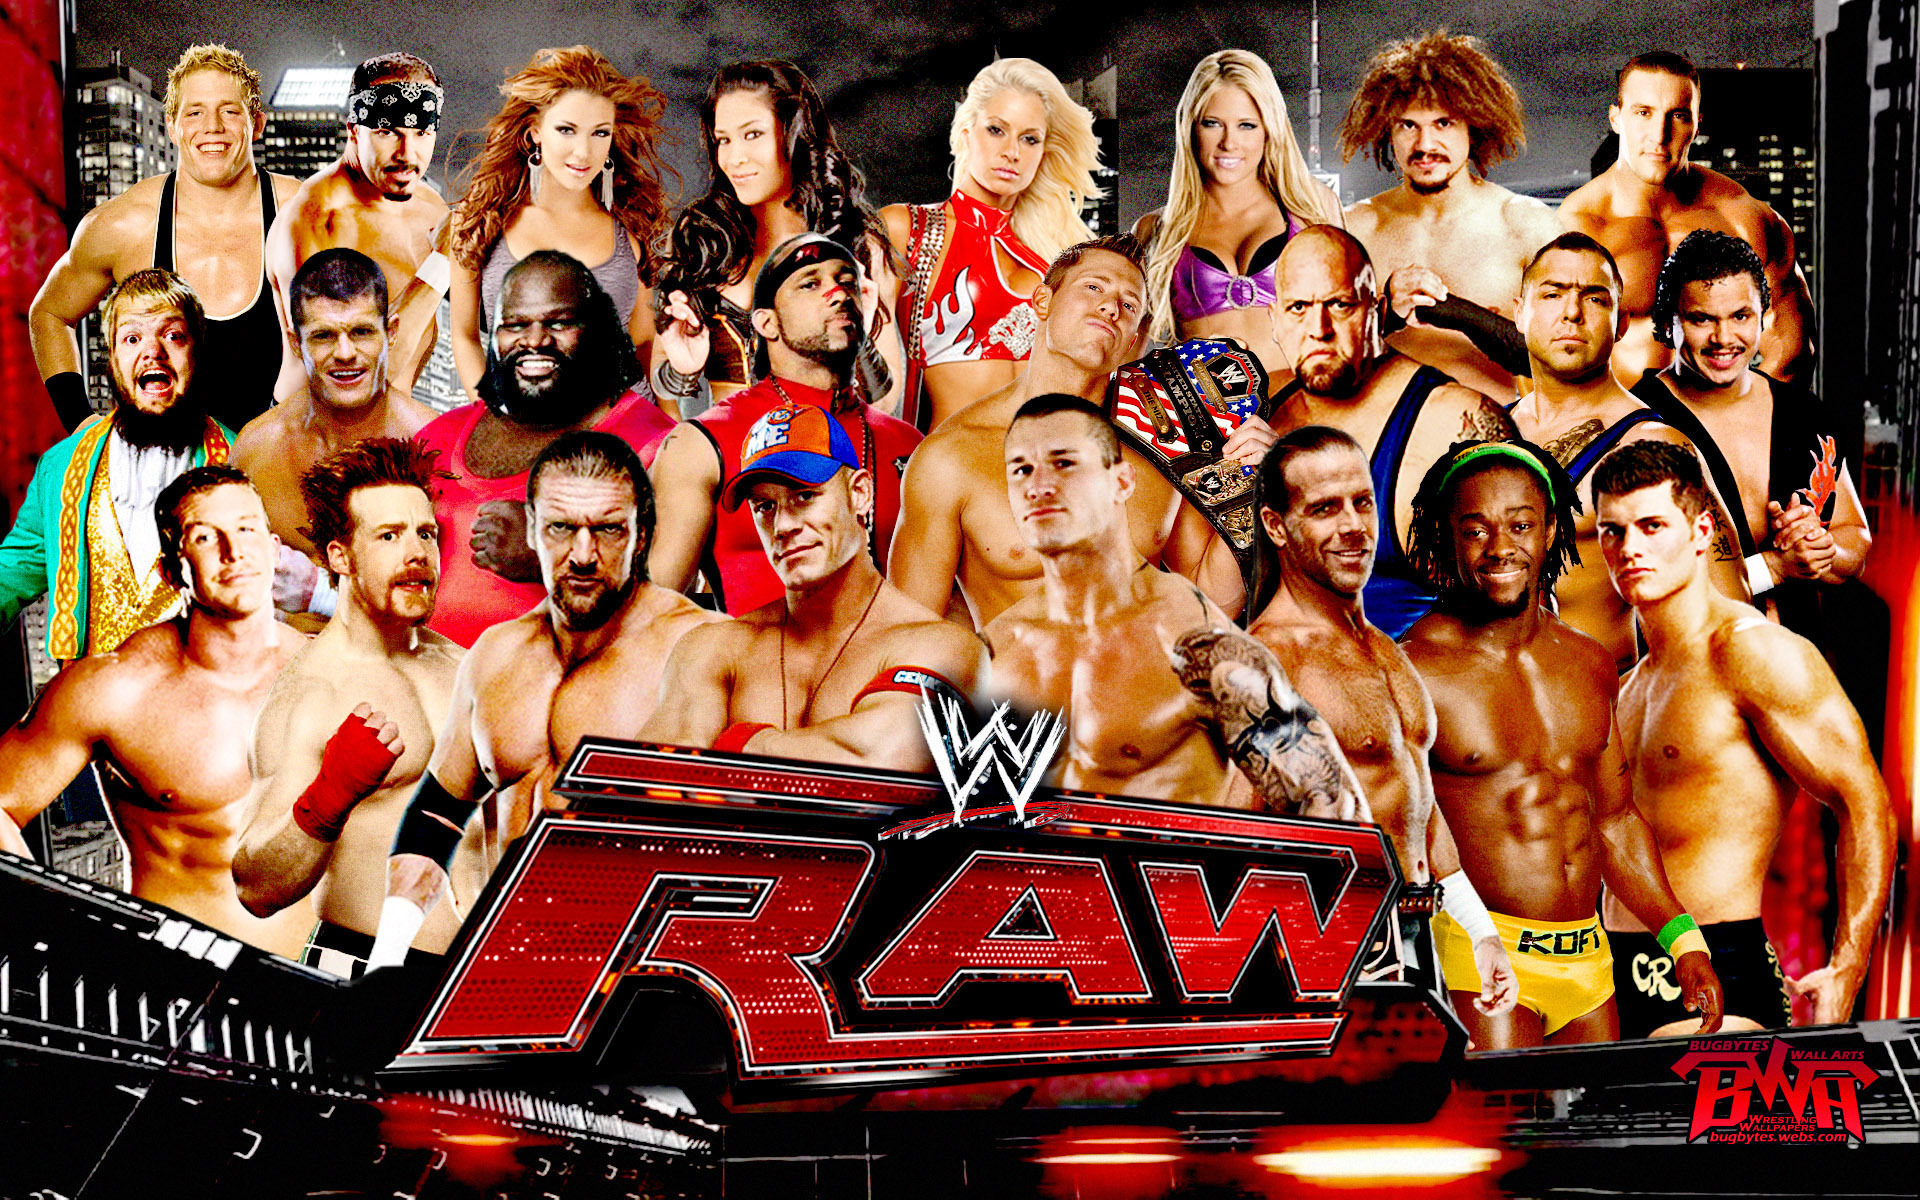 WWE image WWE Raw HD wallpaper and background photo